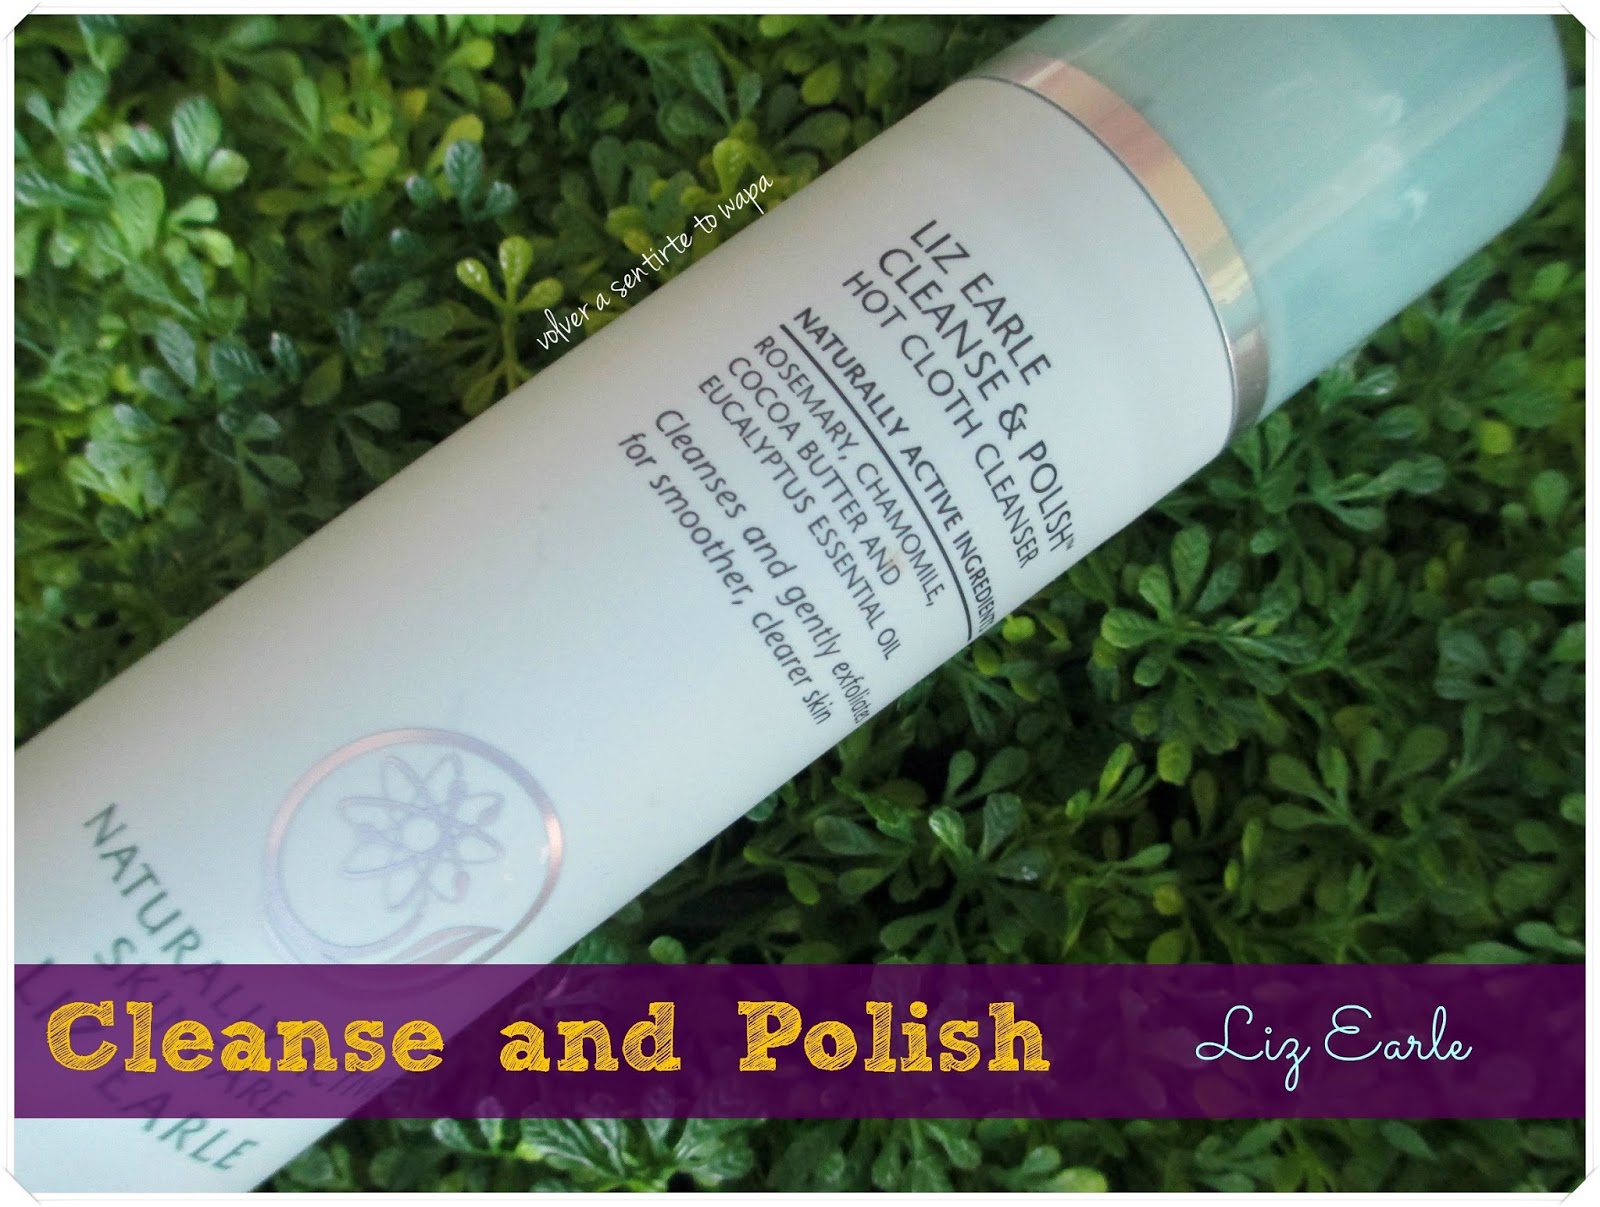 Cleanse & Polish Hot Cloth Cleanser de LIZ EARLE